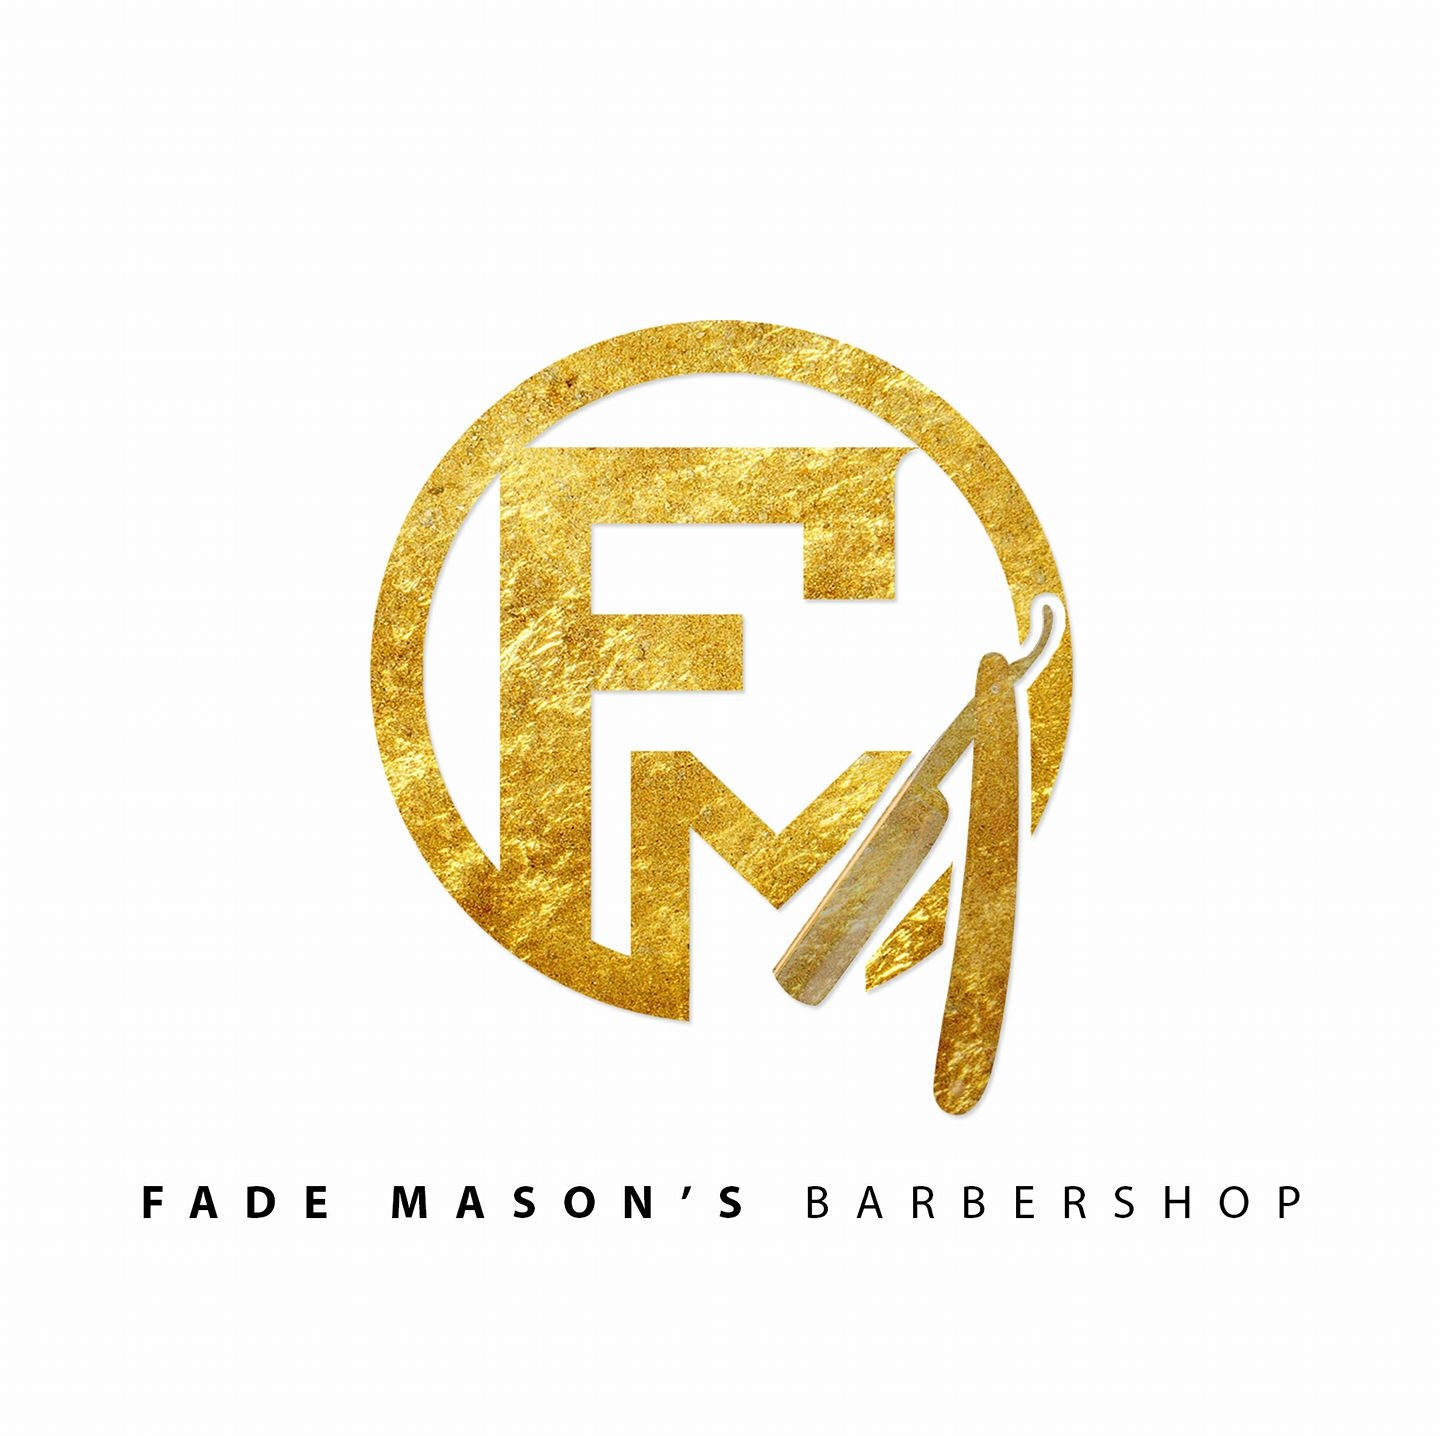 Fade Masons Barber Shop llc 828 Main St, Willimantic Connecticut 06226